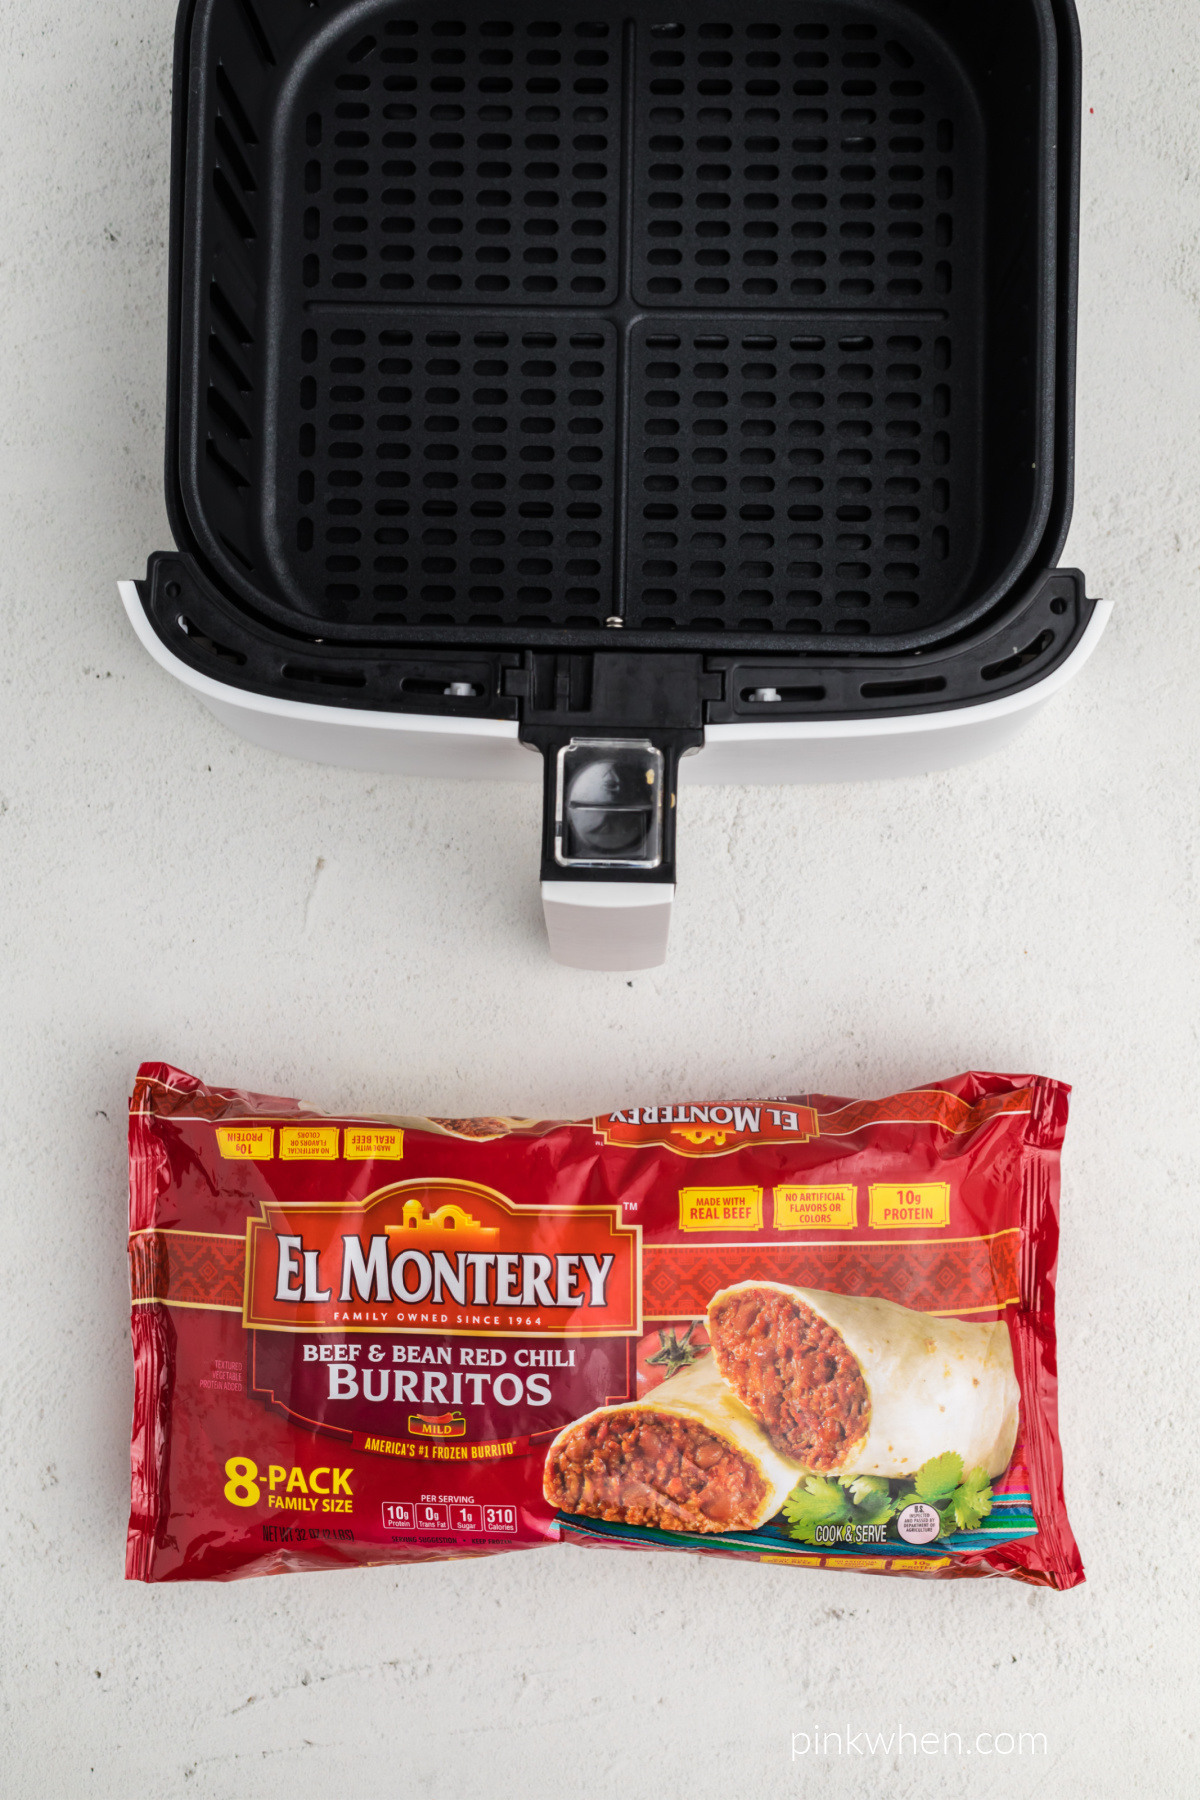 Empty air fryer basket and a package of El Monterey frozen burritos.